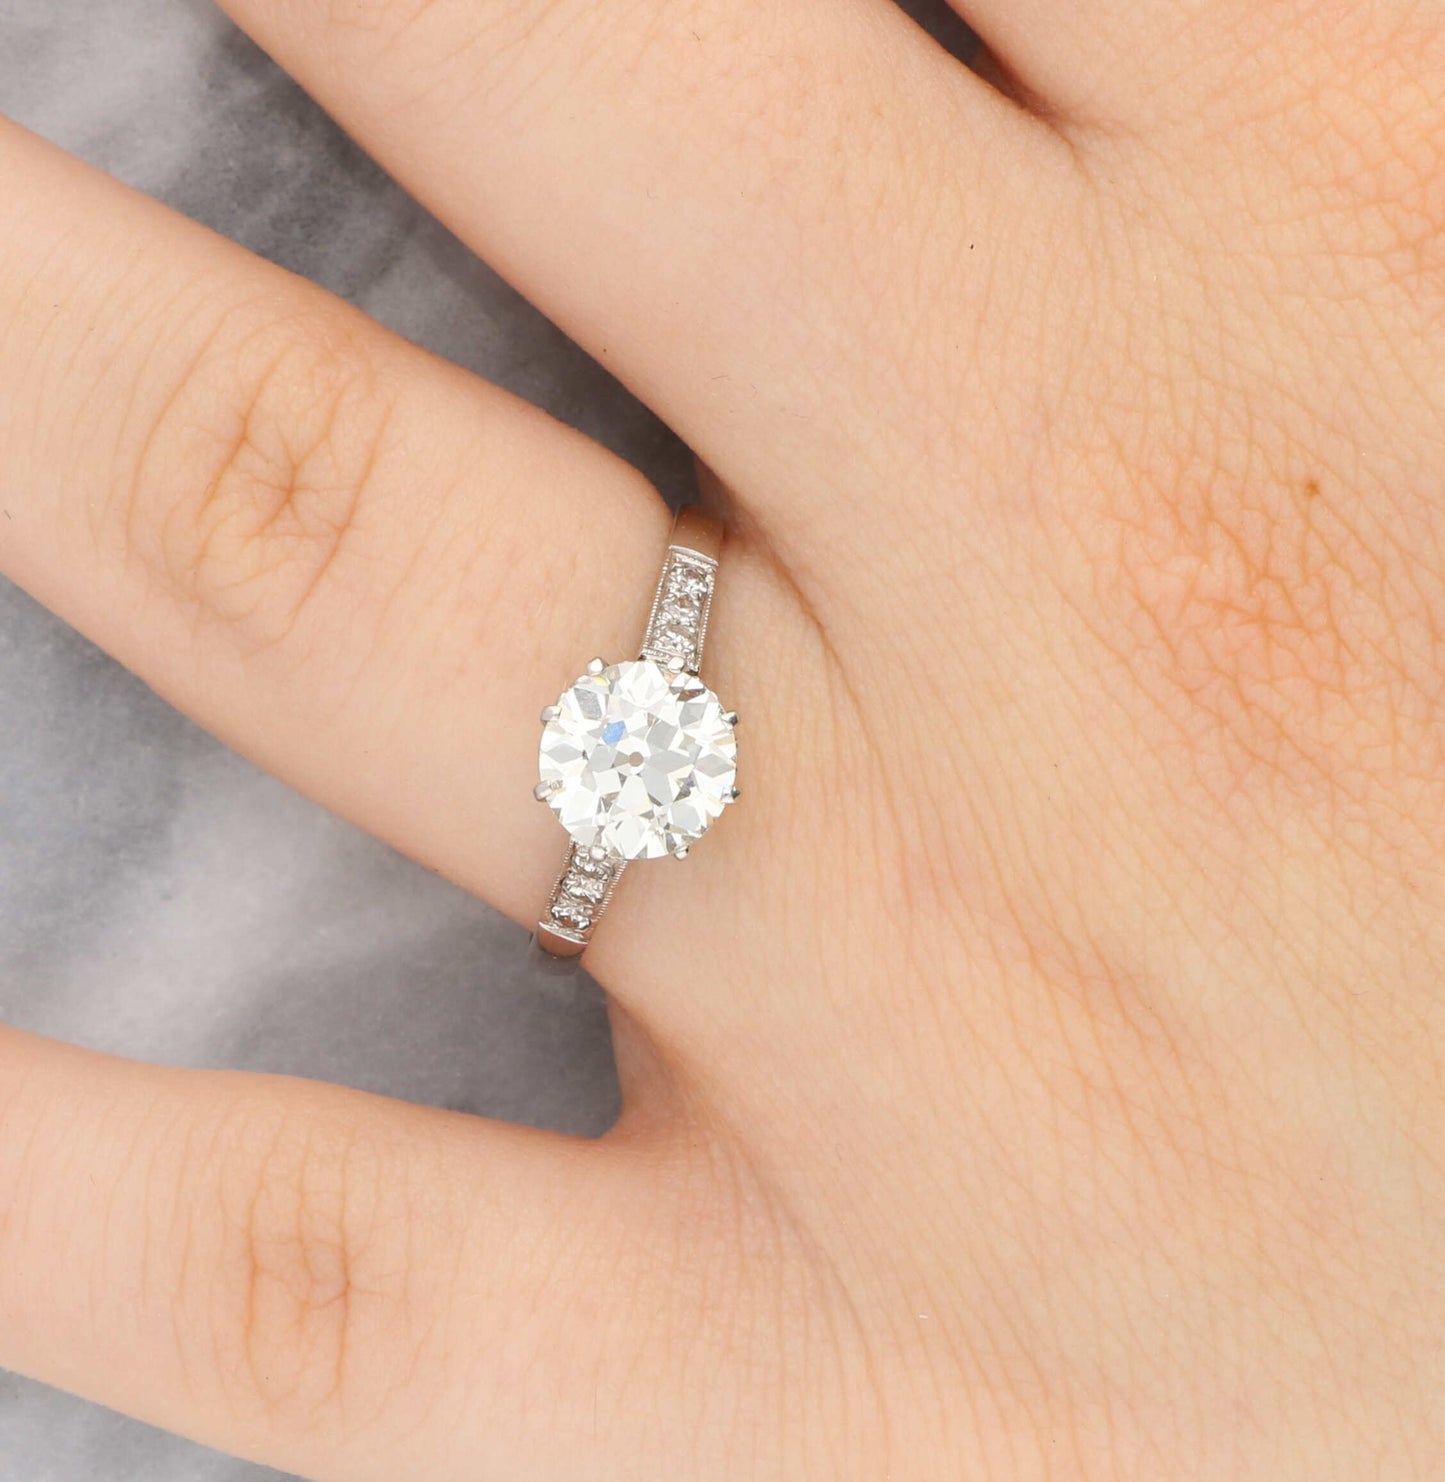 A single stone 1.68ct diamond ring